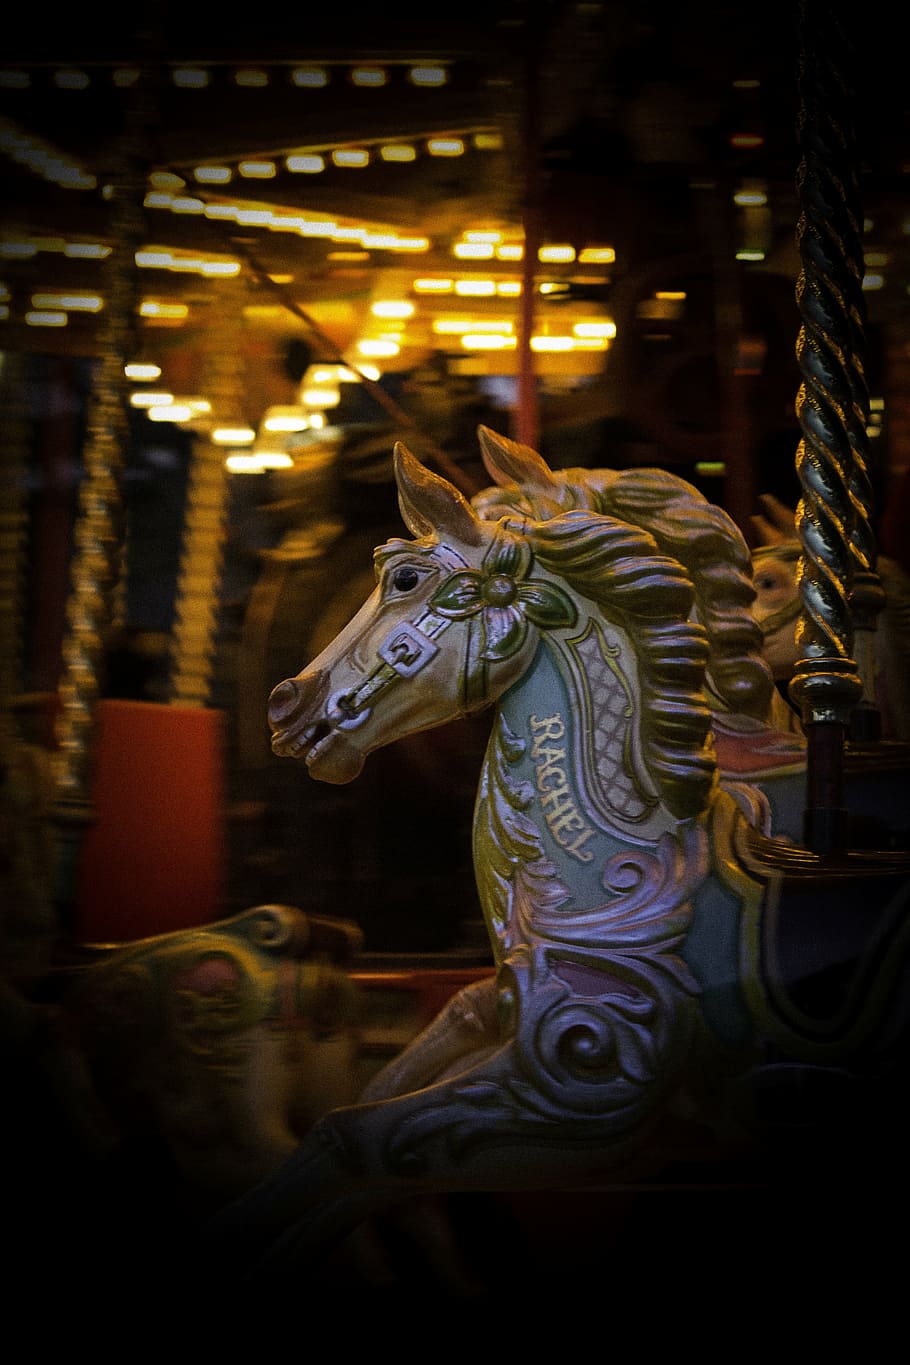 carousel, horse, fair, carnival, amusement, ride, vintage, merry-go-round, roundabout, animal representation